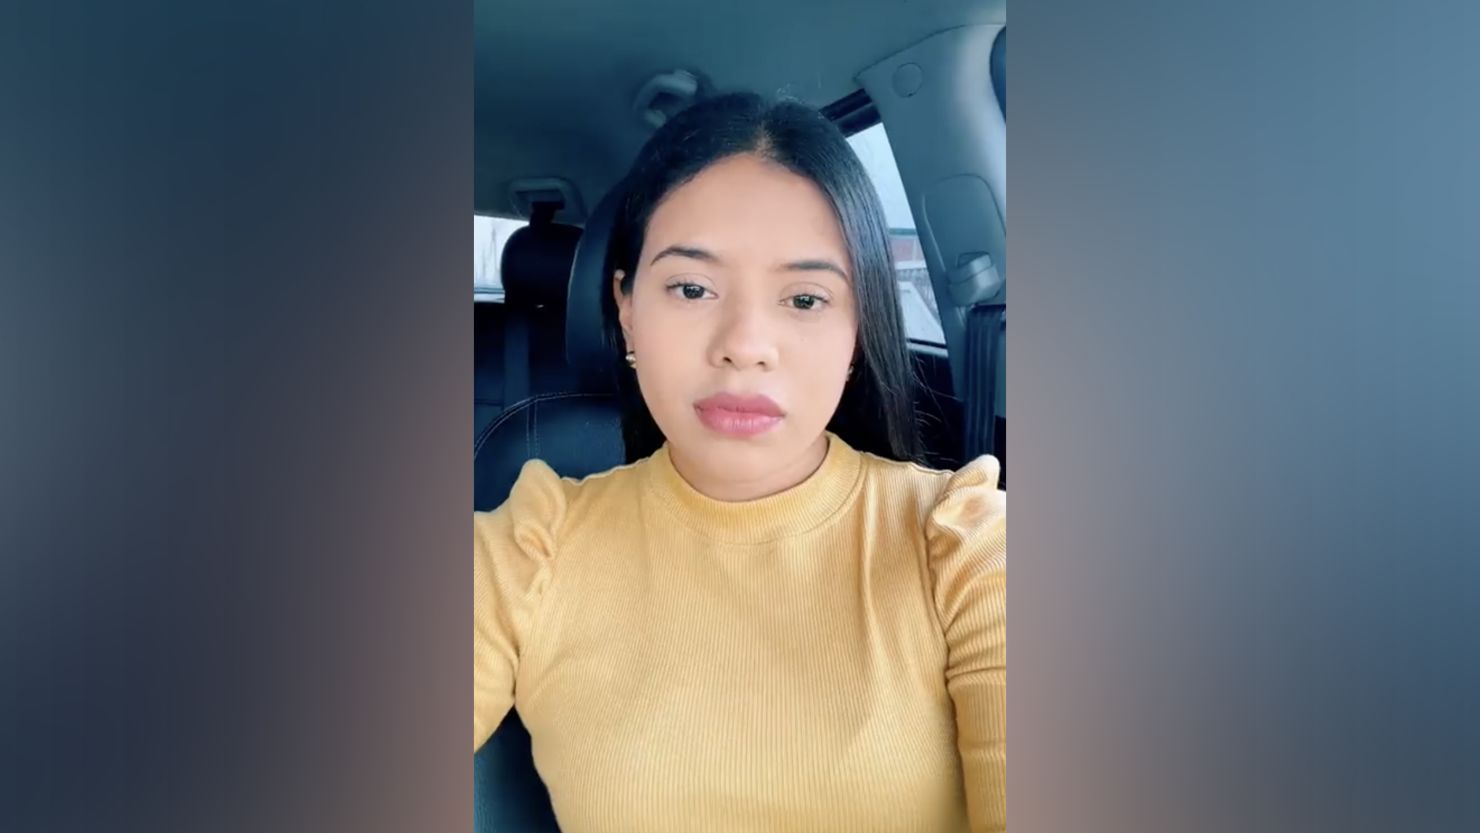 Brigitte García, Ecuador's youngest mayor, was found shot dead on Sunday, according to the police.